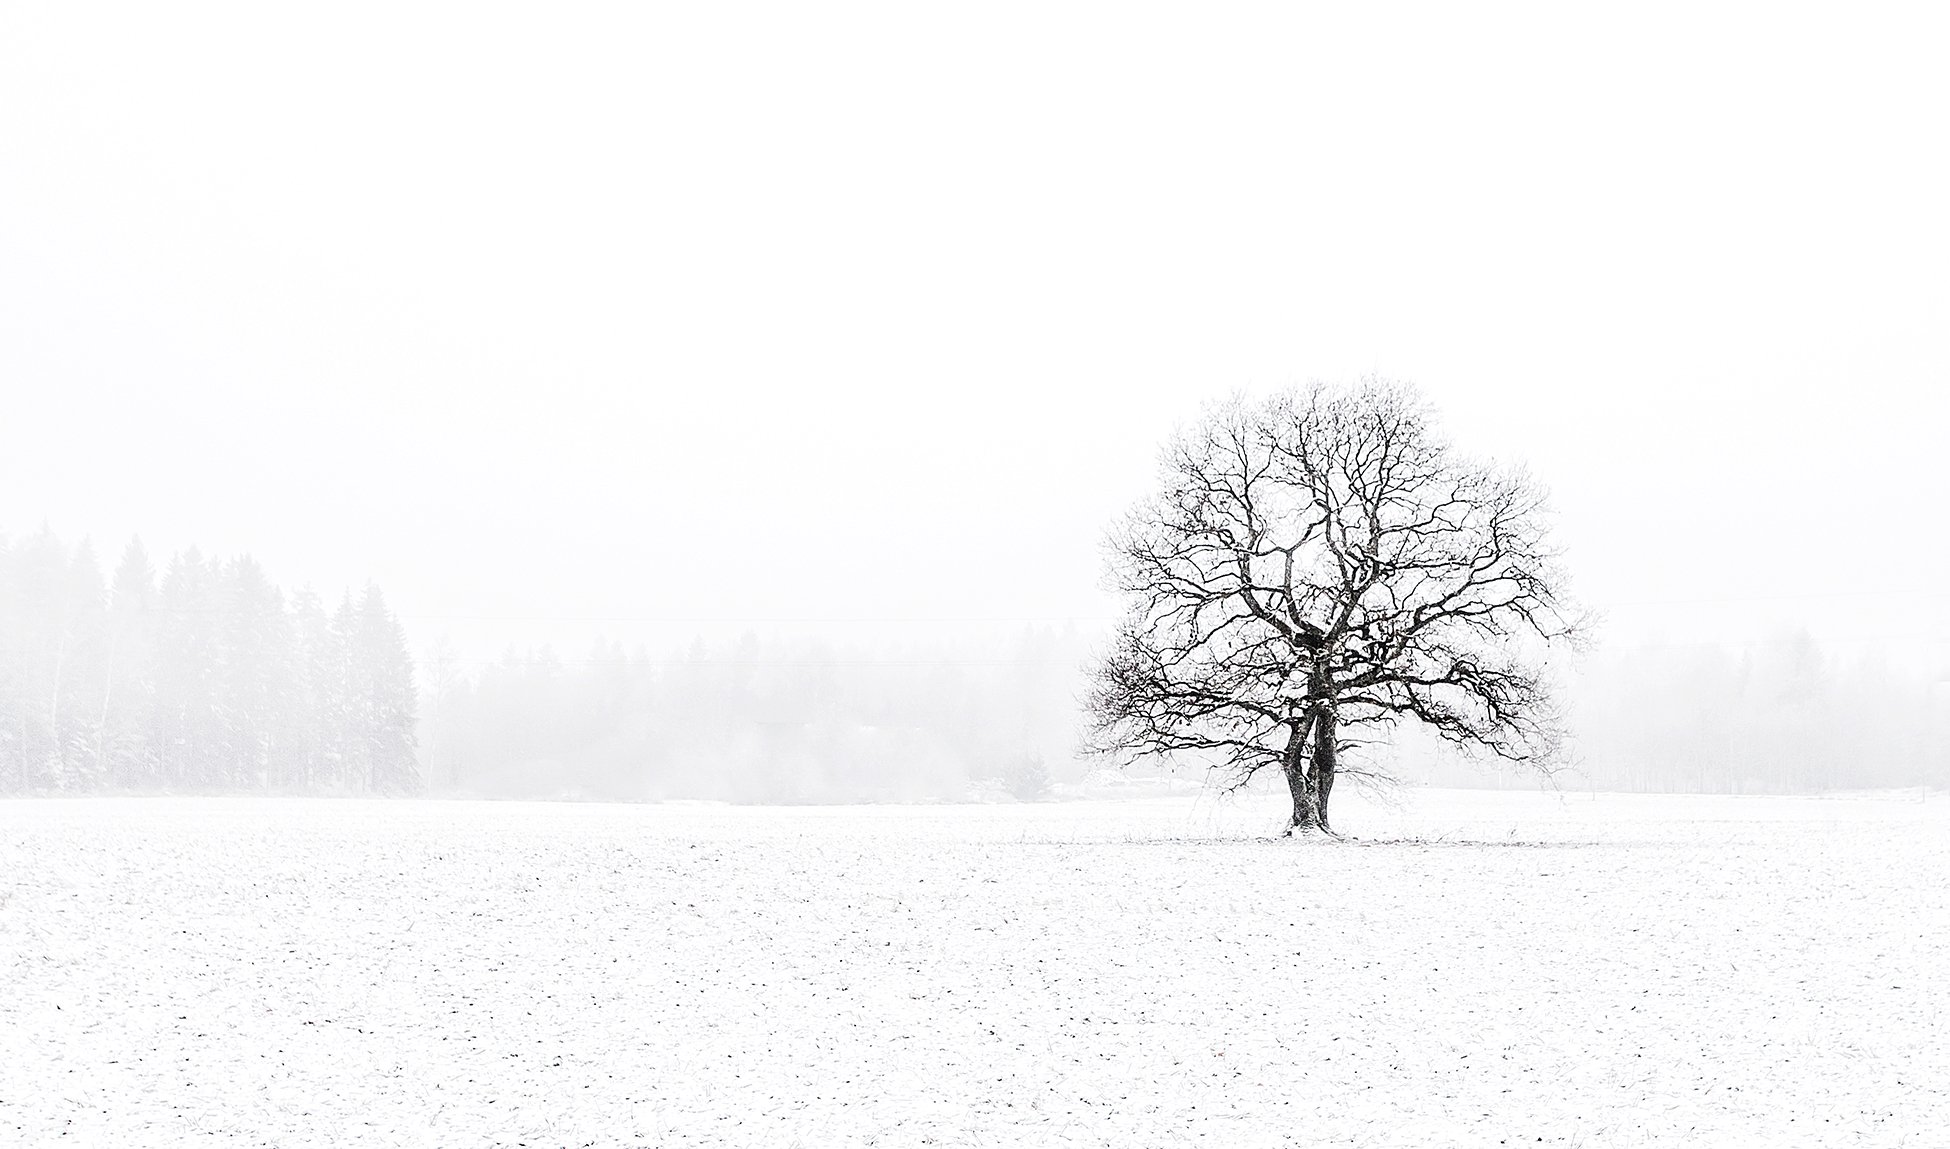 2014, Дерево, Зима, Контраст, Снег, Эстония, Kljuchenkow Aleksandr